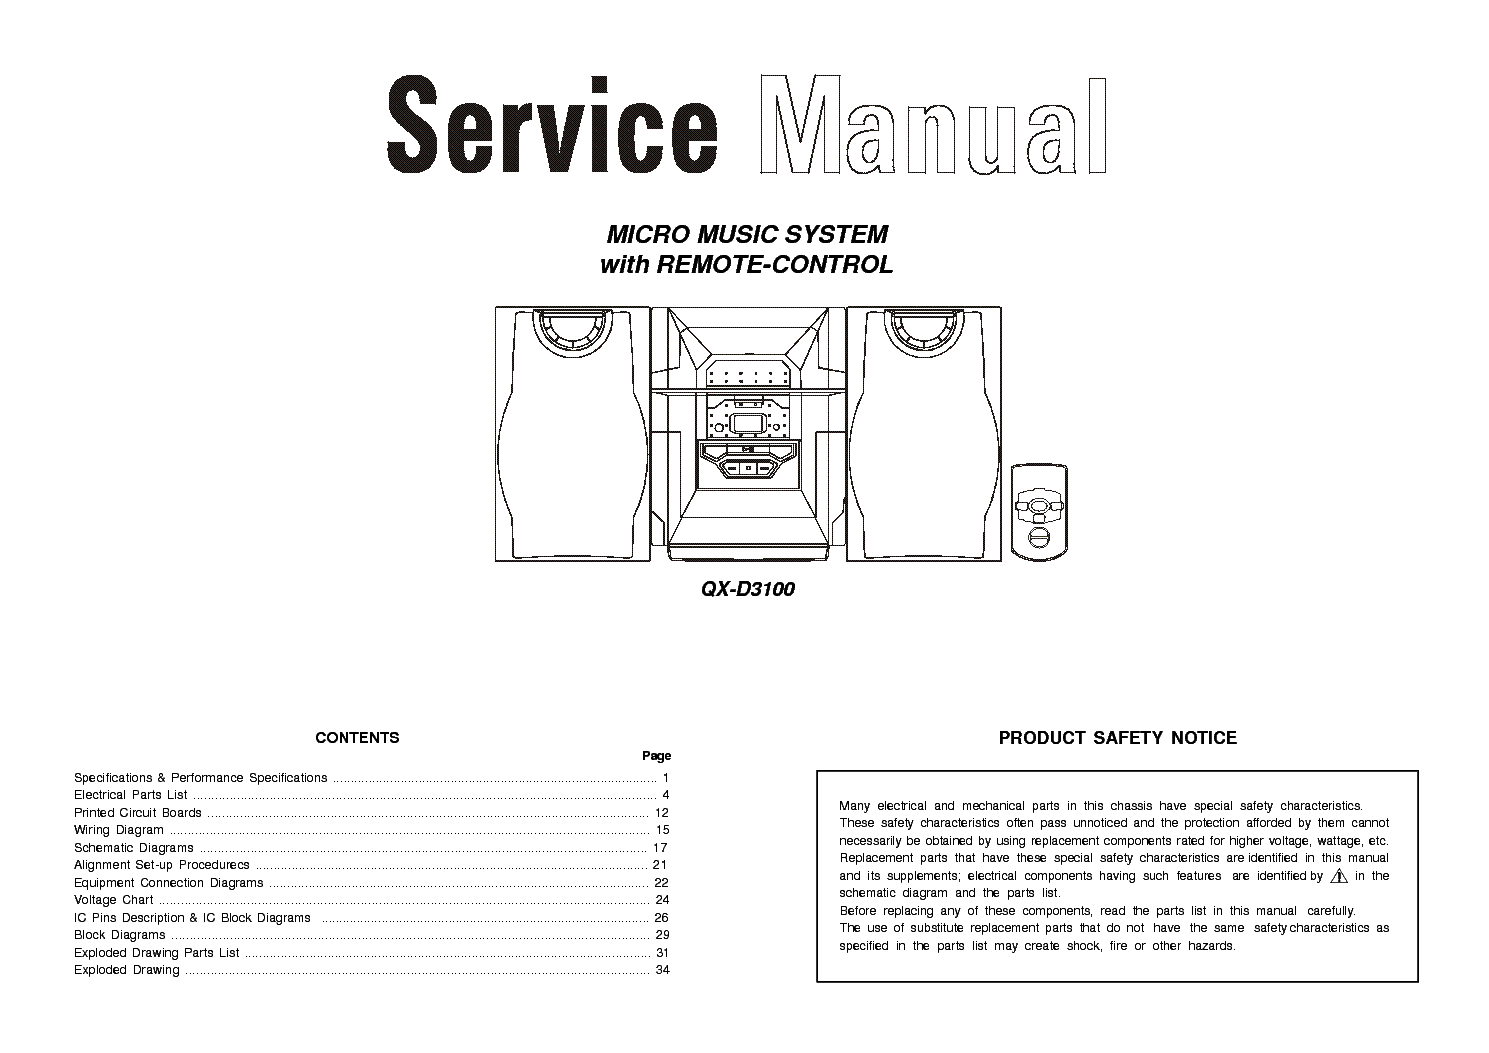 AKAI QX-D3100 SM service manual (1st page)